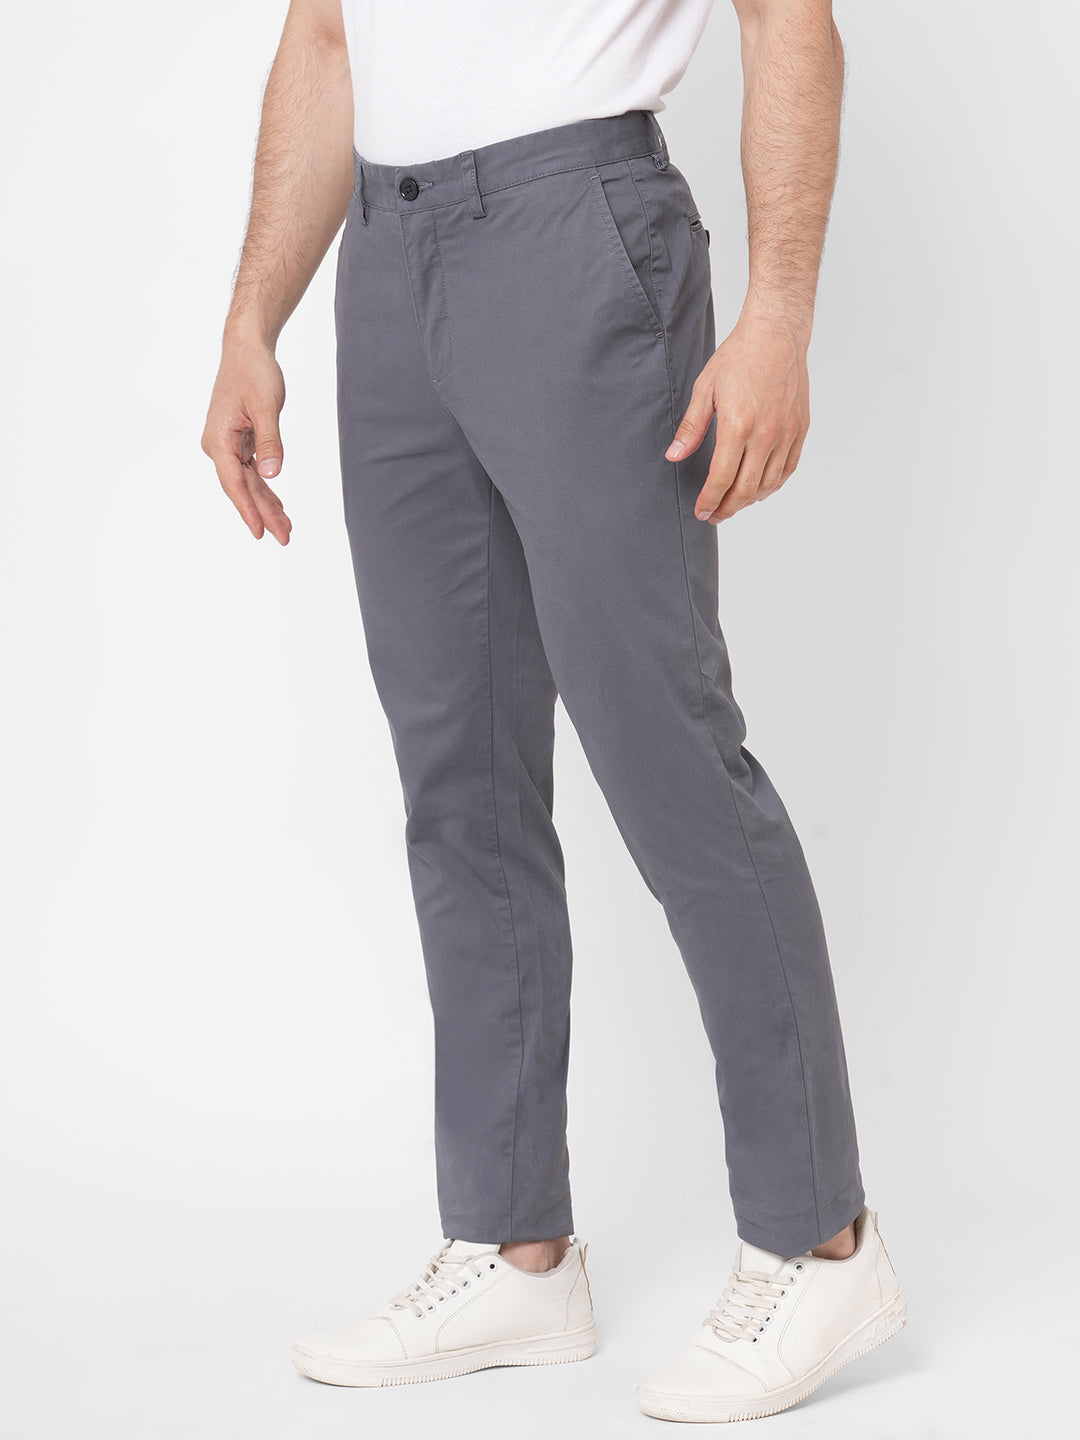 Buy Navy Blue Narrow Pant Cotton Khadi Narrow Pant for Best Price, Reviews,  Free Shipping